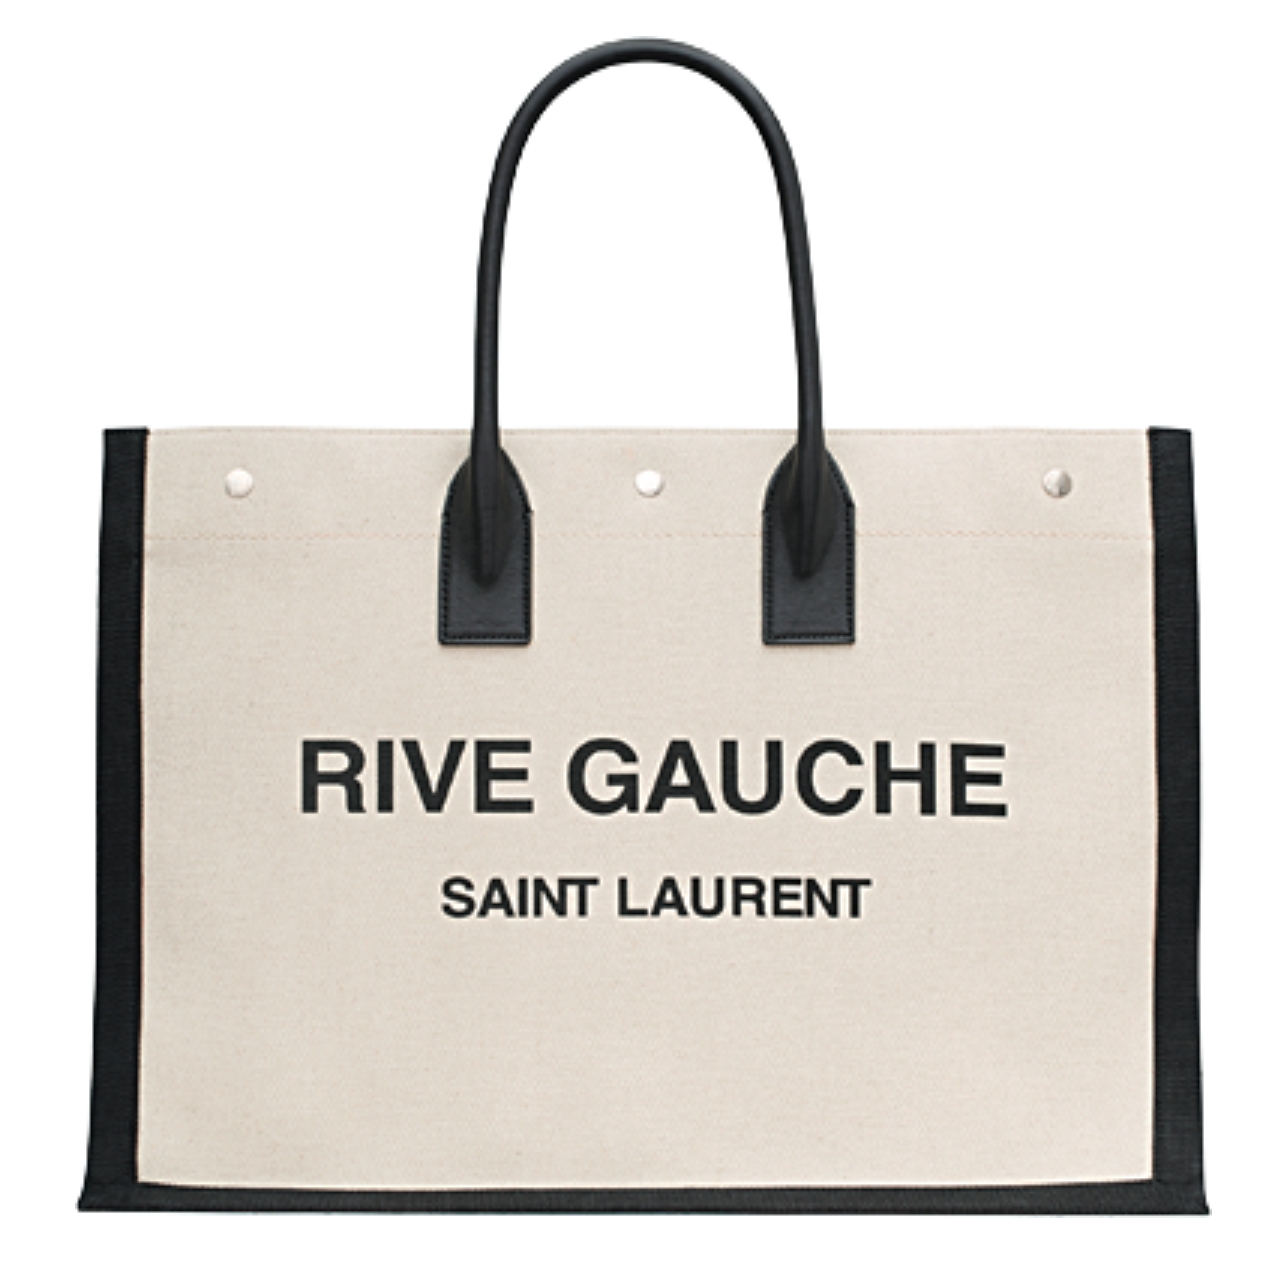 Black and cream Saint Laurent Rive Gauche tote bag